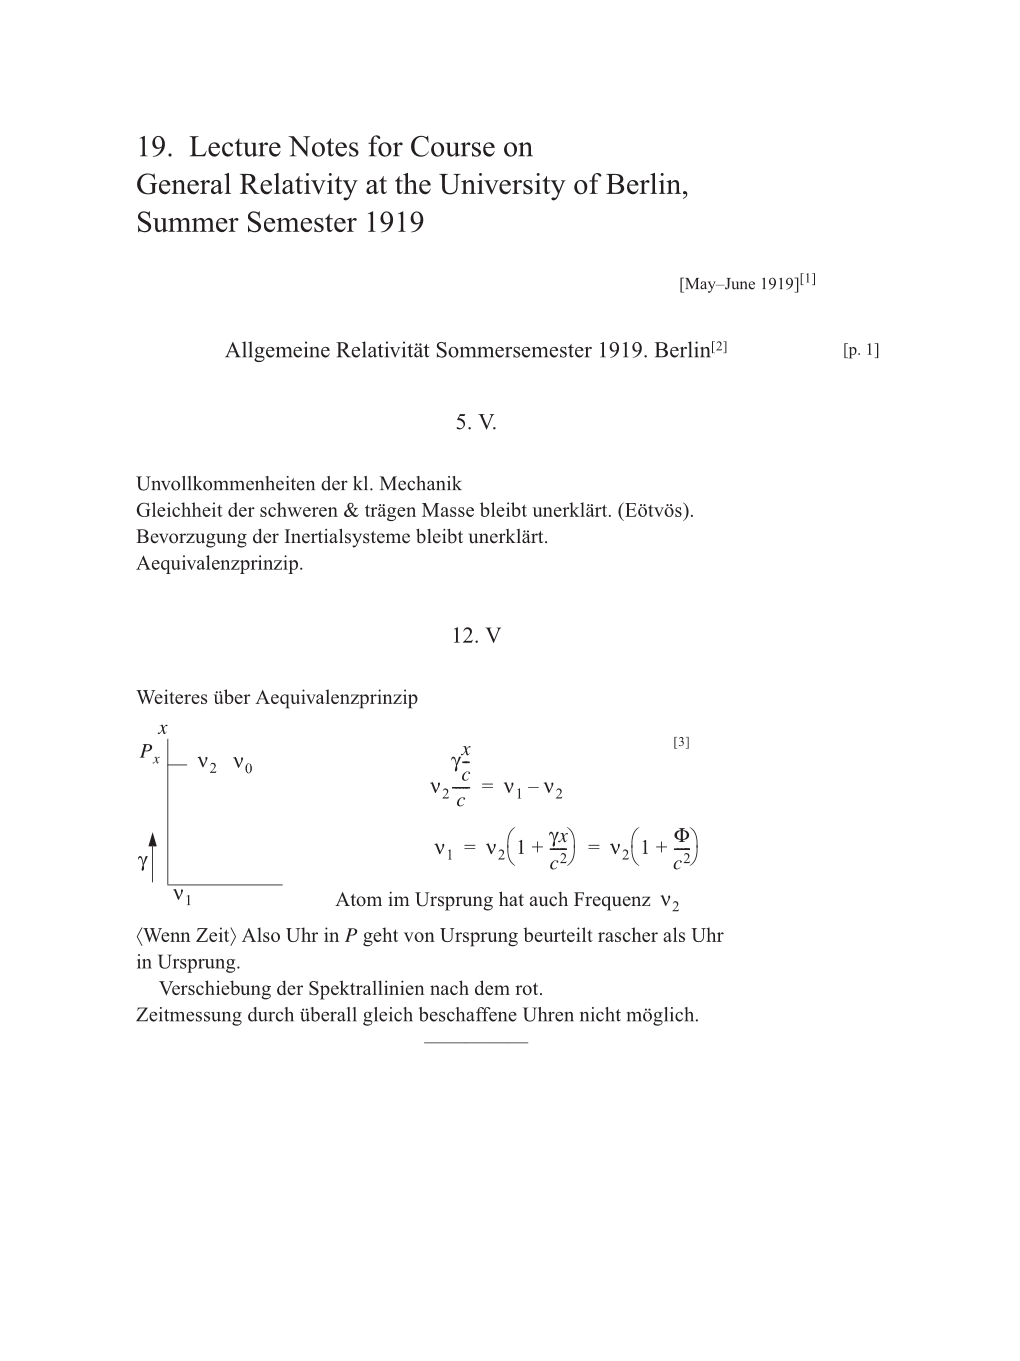 Volume 7: The Berlin Years: Writings, 1918-1921 page 147